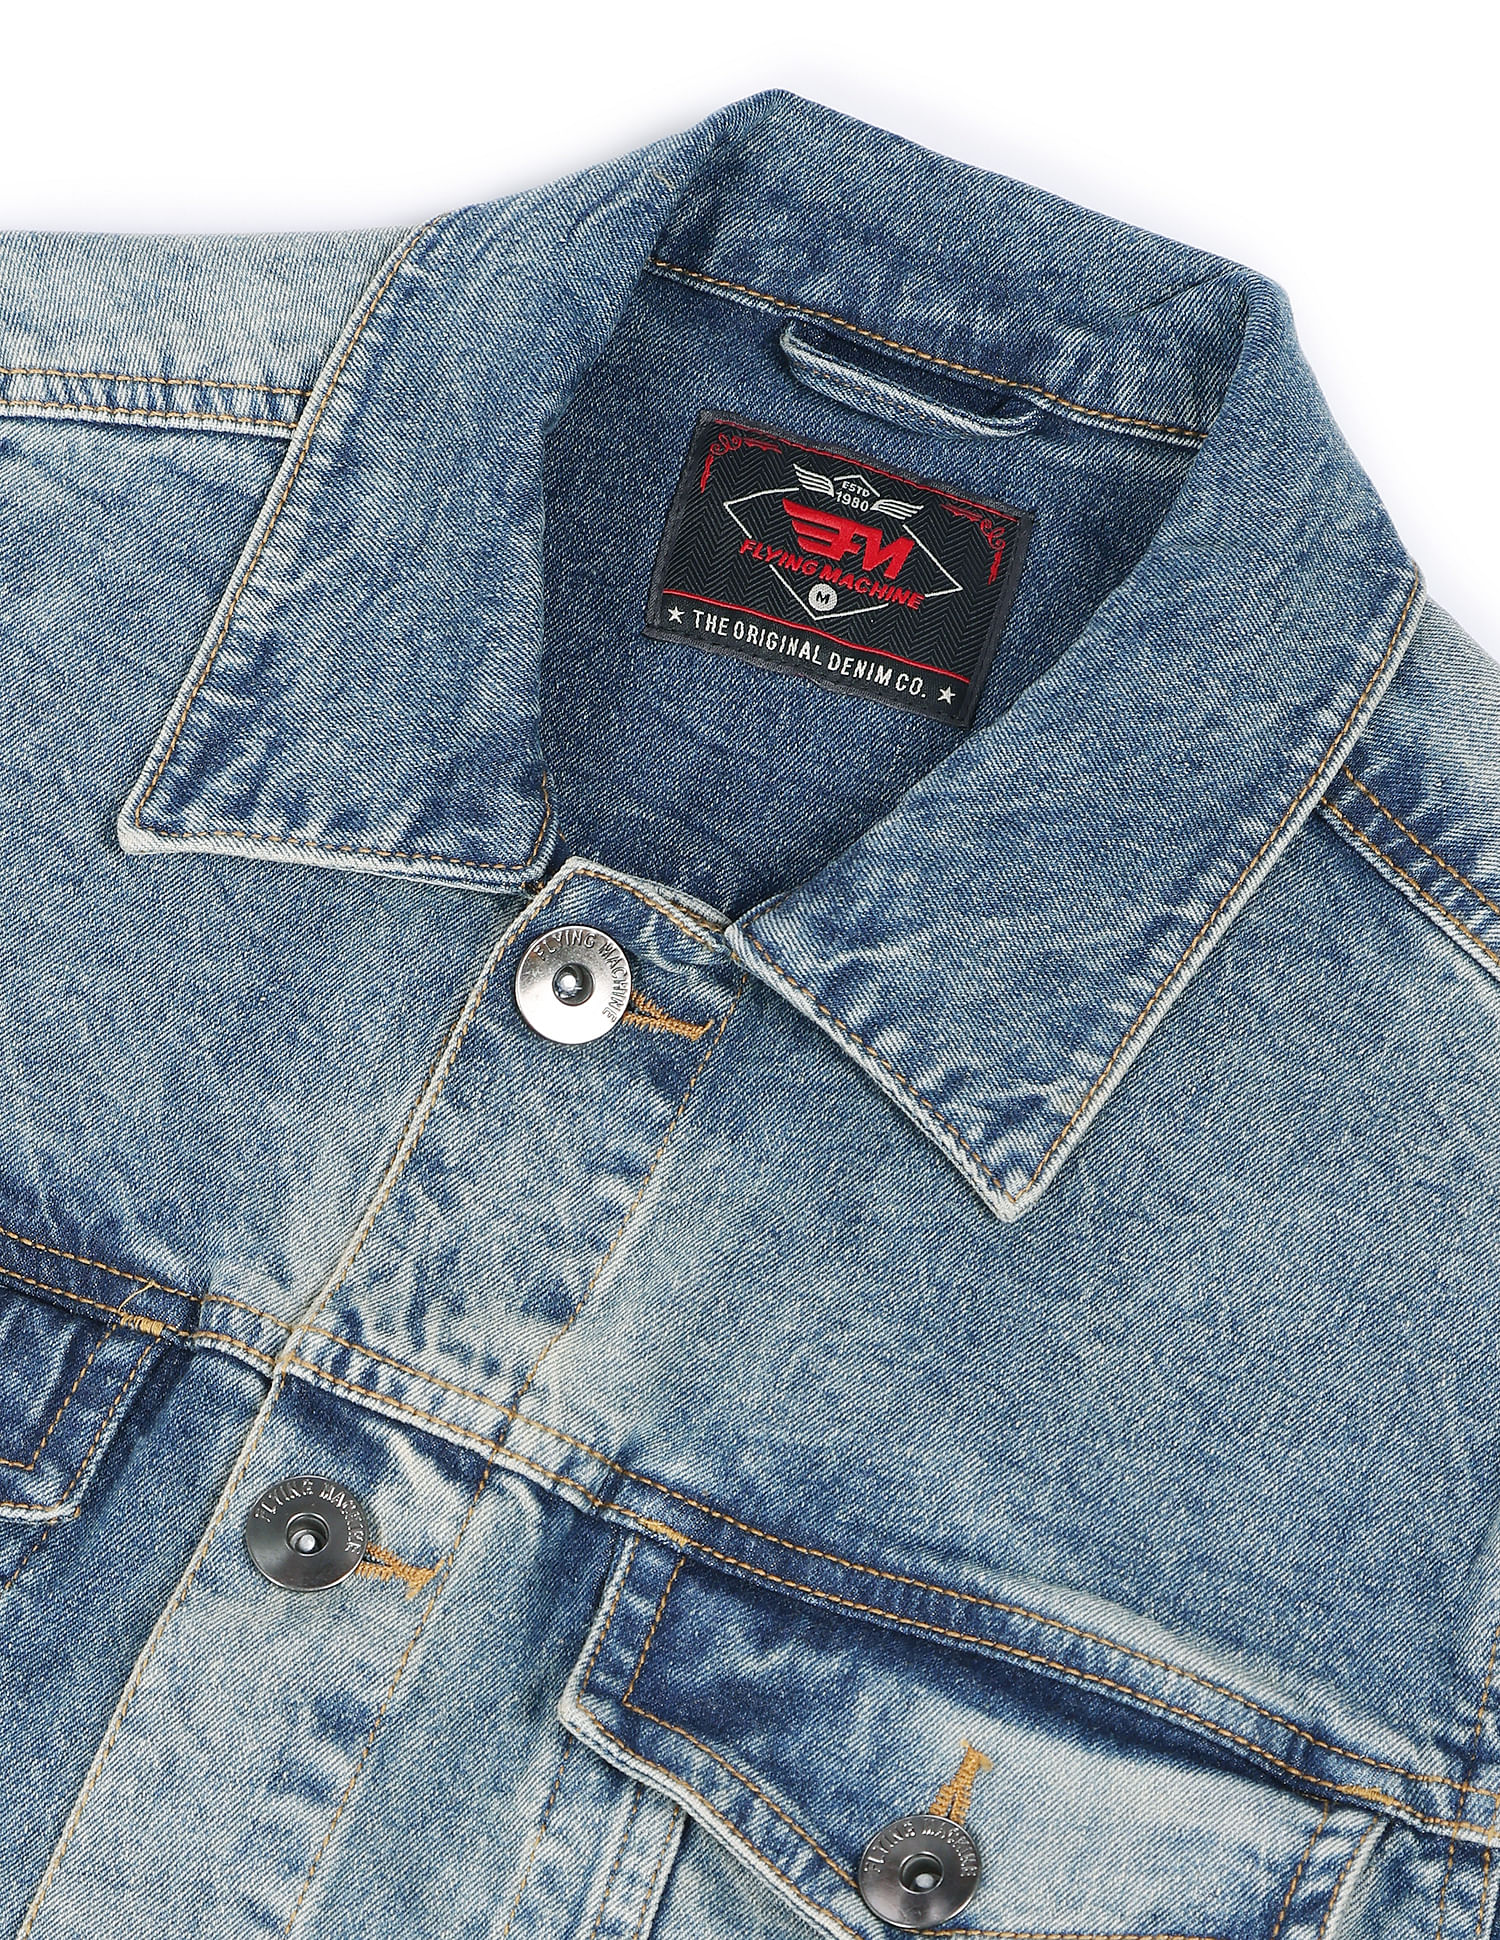 Mens Wrangler Cowboy Cut Unlined Denim Jacket - Inside Pockets - 74145PW |  eBay